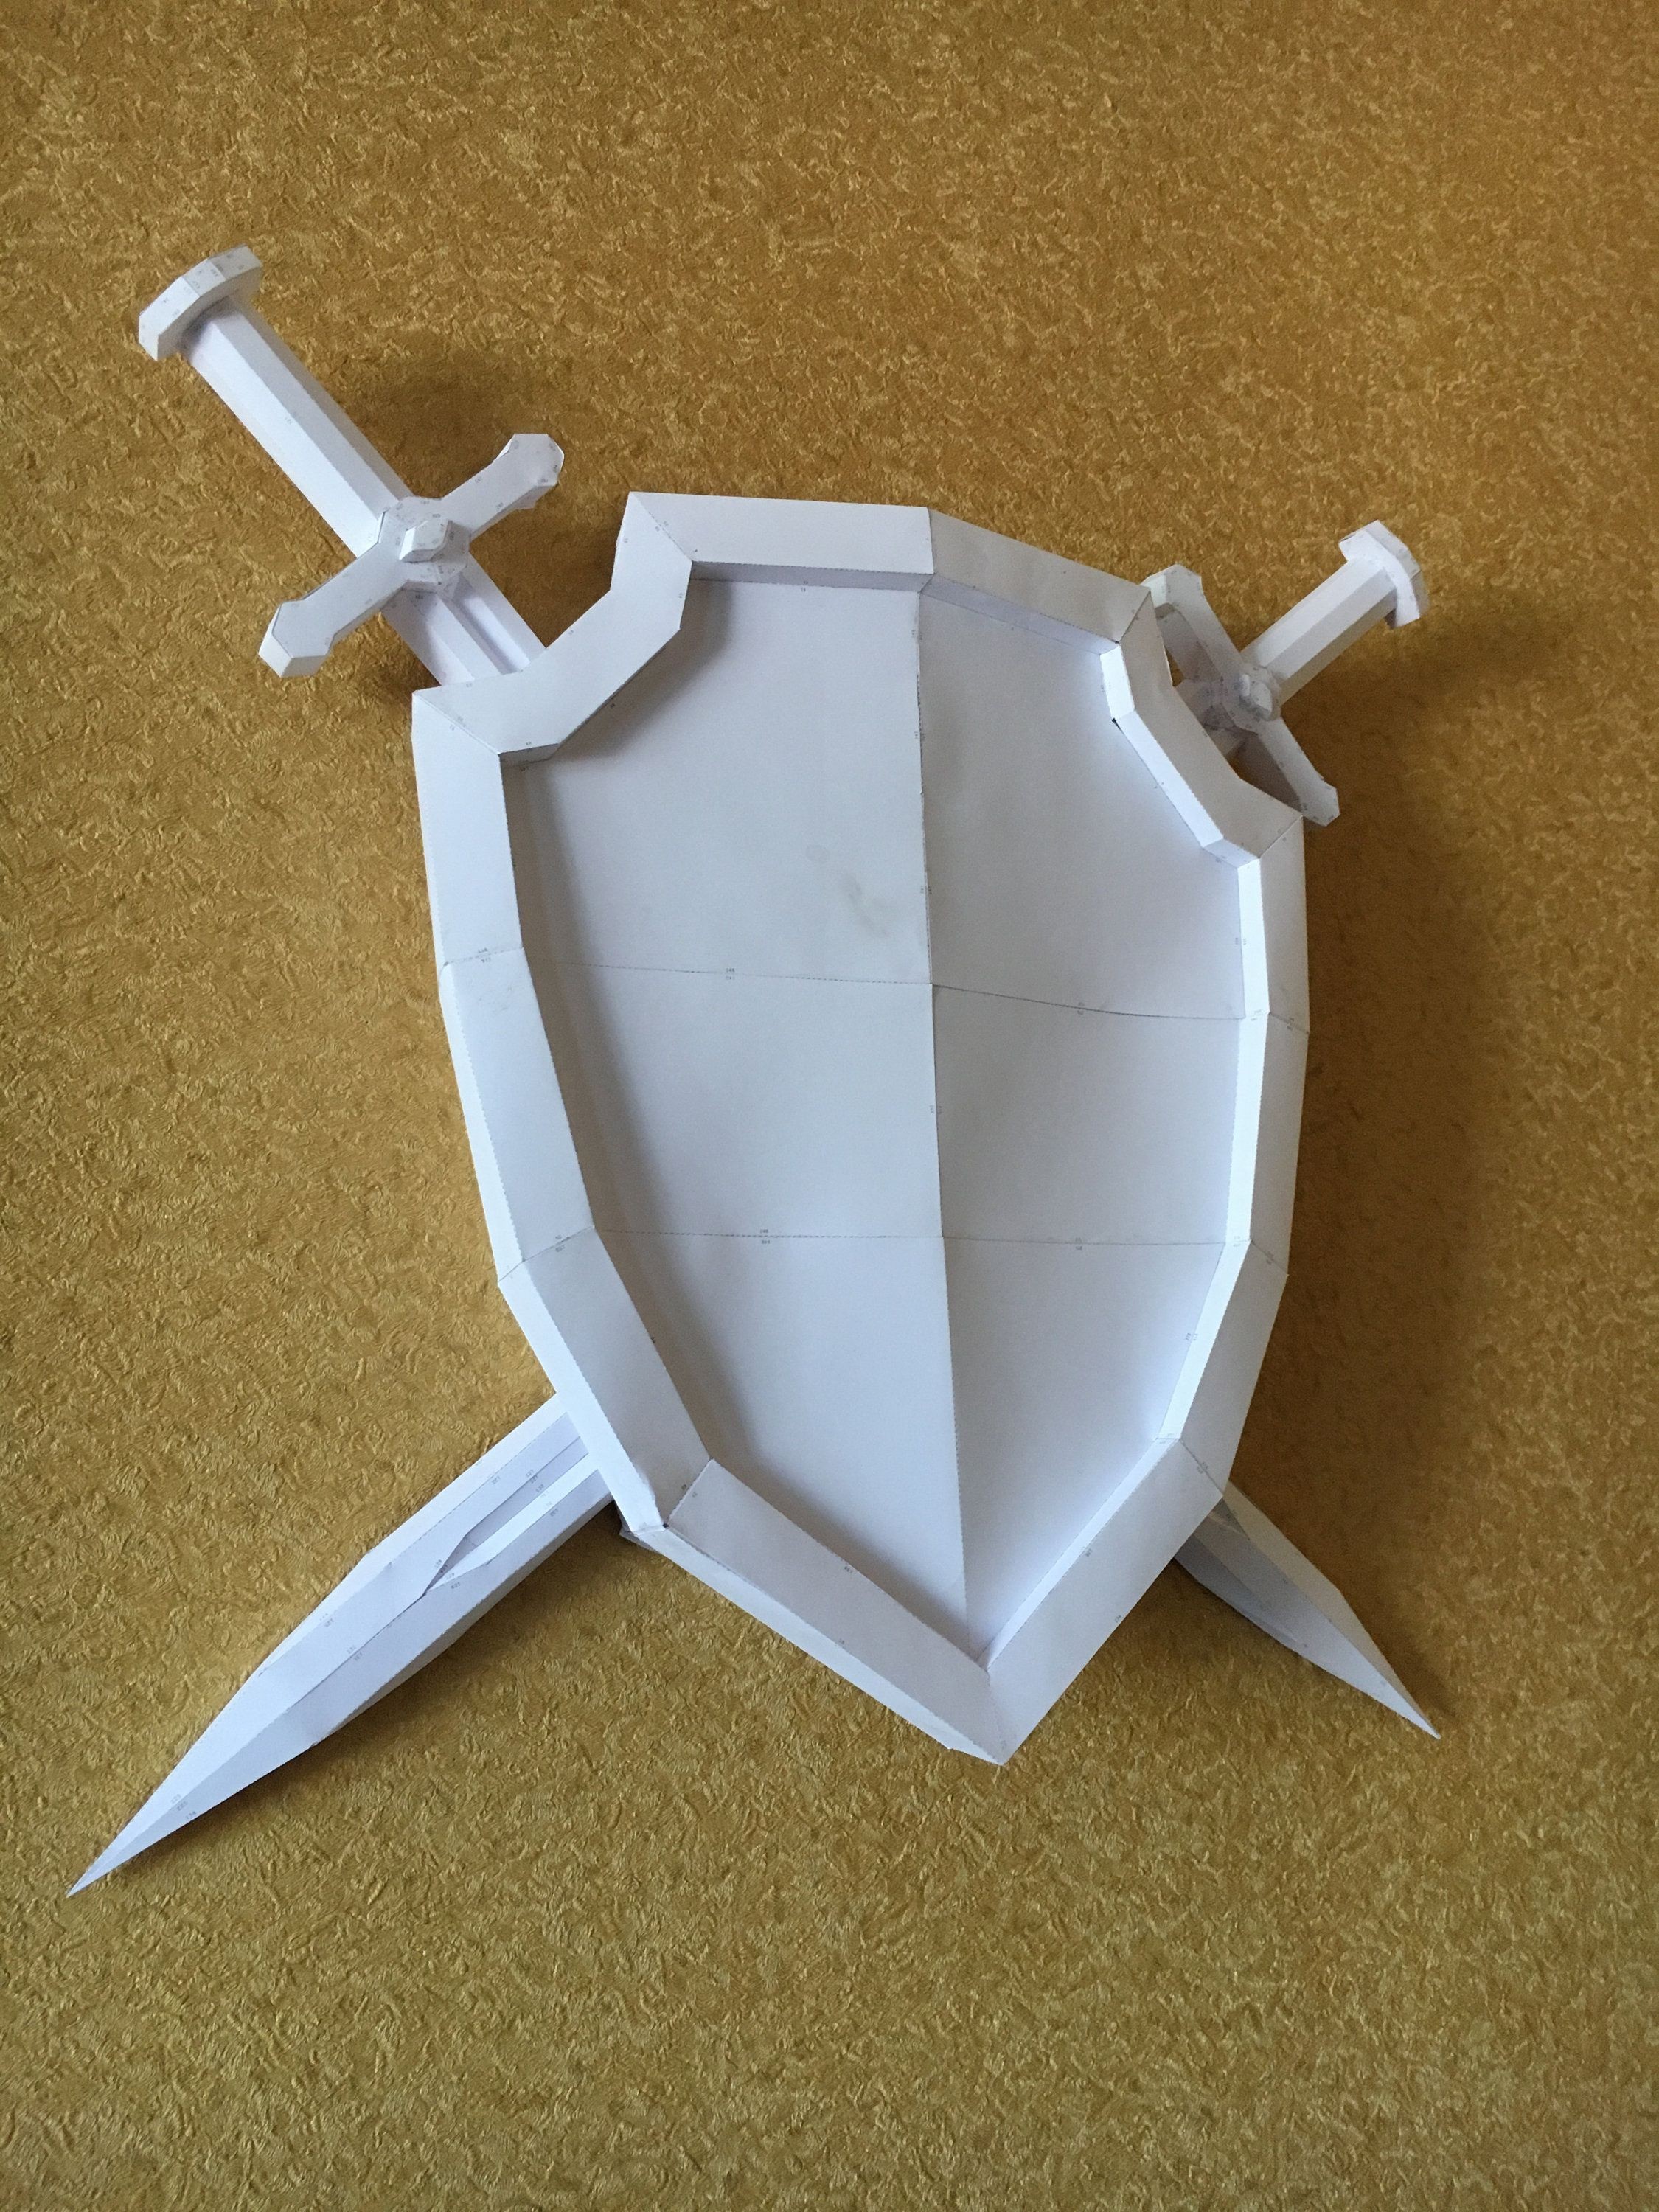 Tiger Papercraft Sword Shield Diy Papercraft Model ÐÑÐ¼Ð°Ð¶Ð½ÑÐµ Ð¸Ð·Ð´ÐµÐ Ð¸Ñ